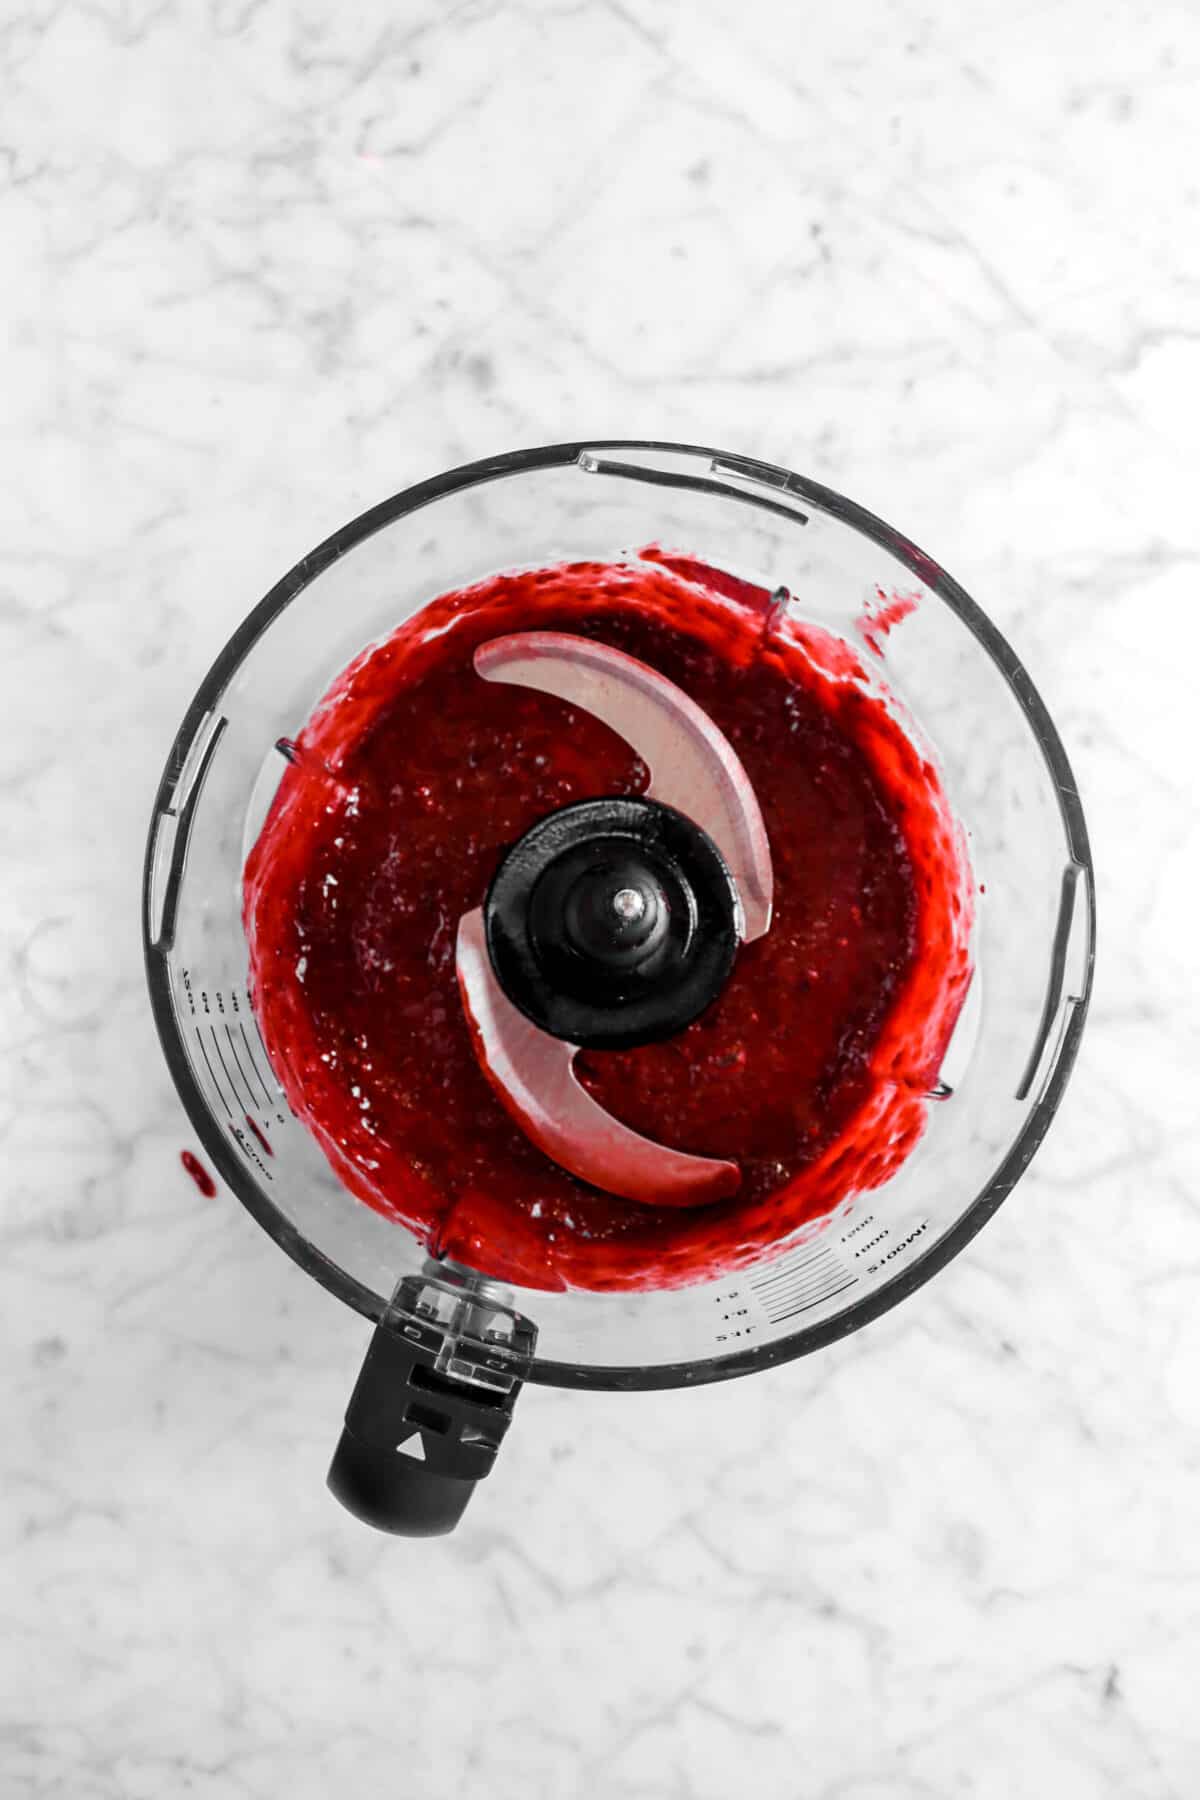 blended blackberry jam in food processor